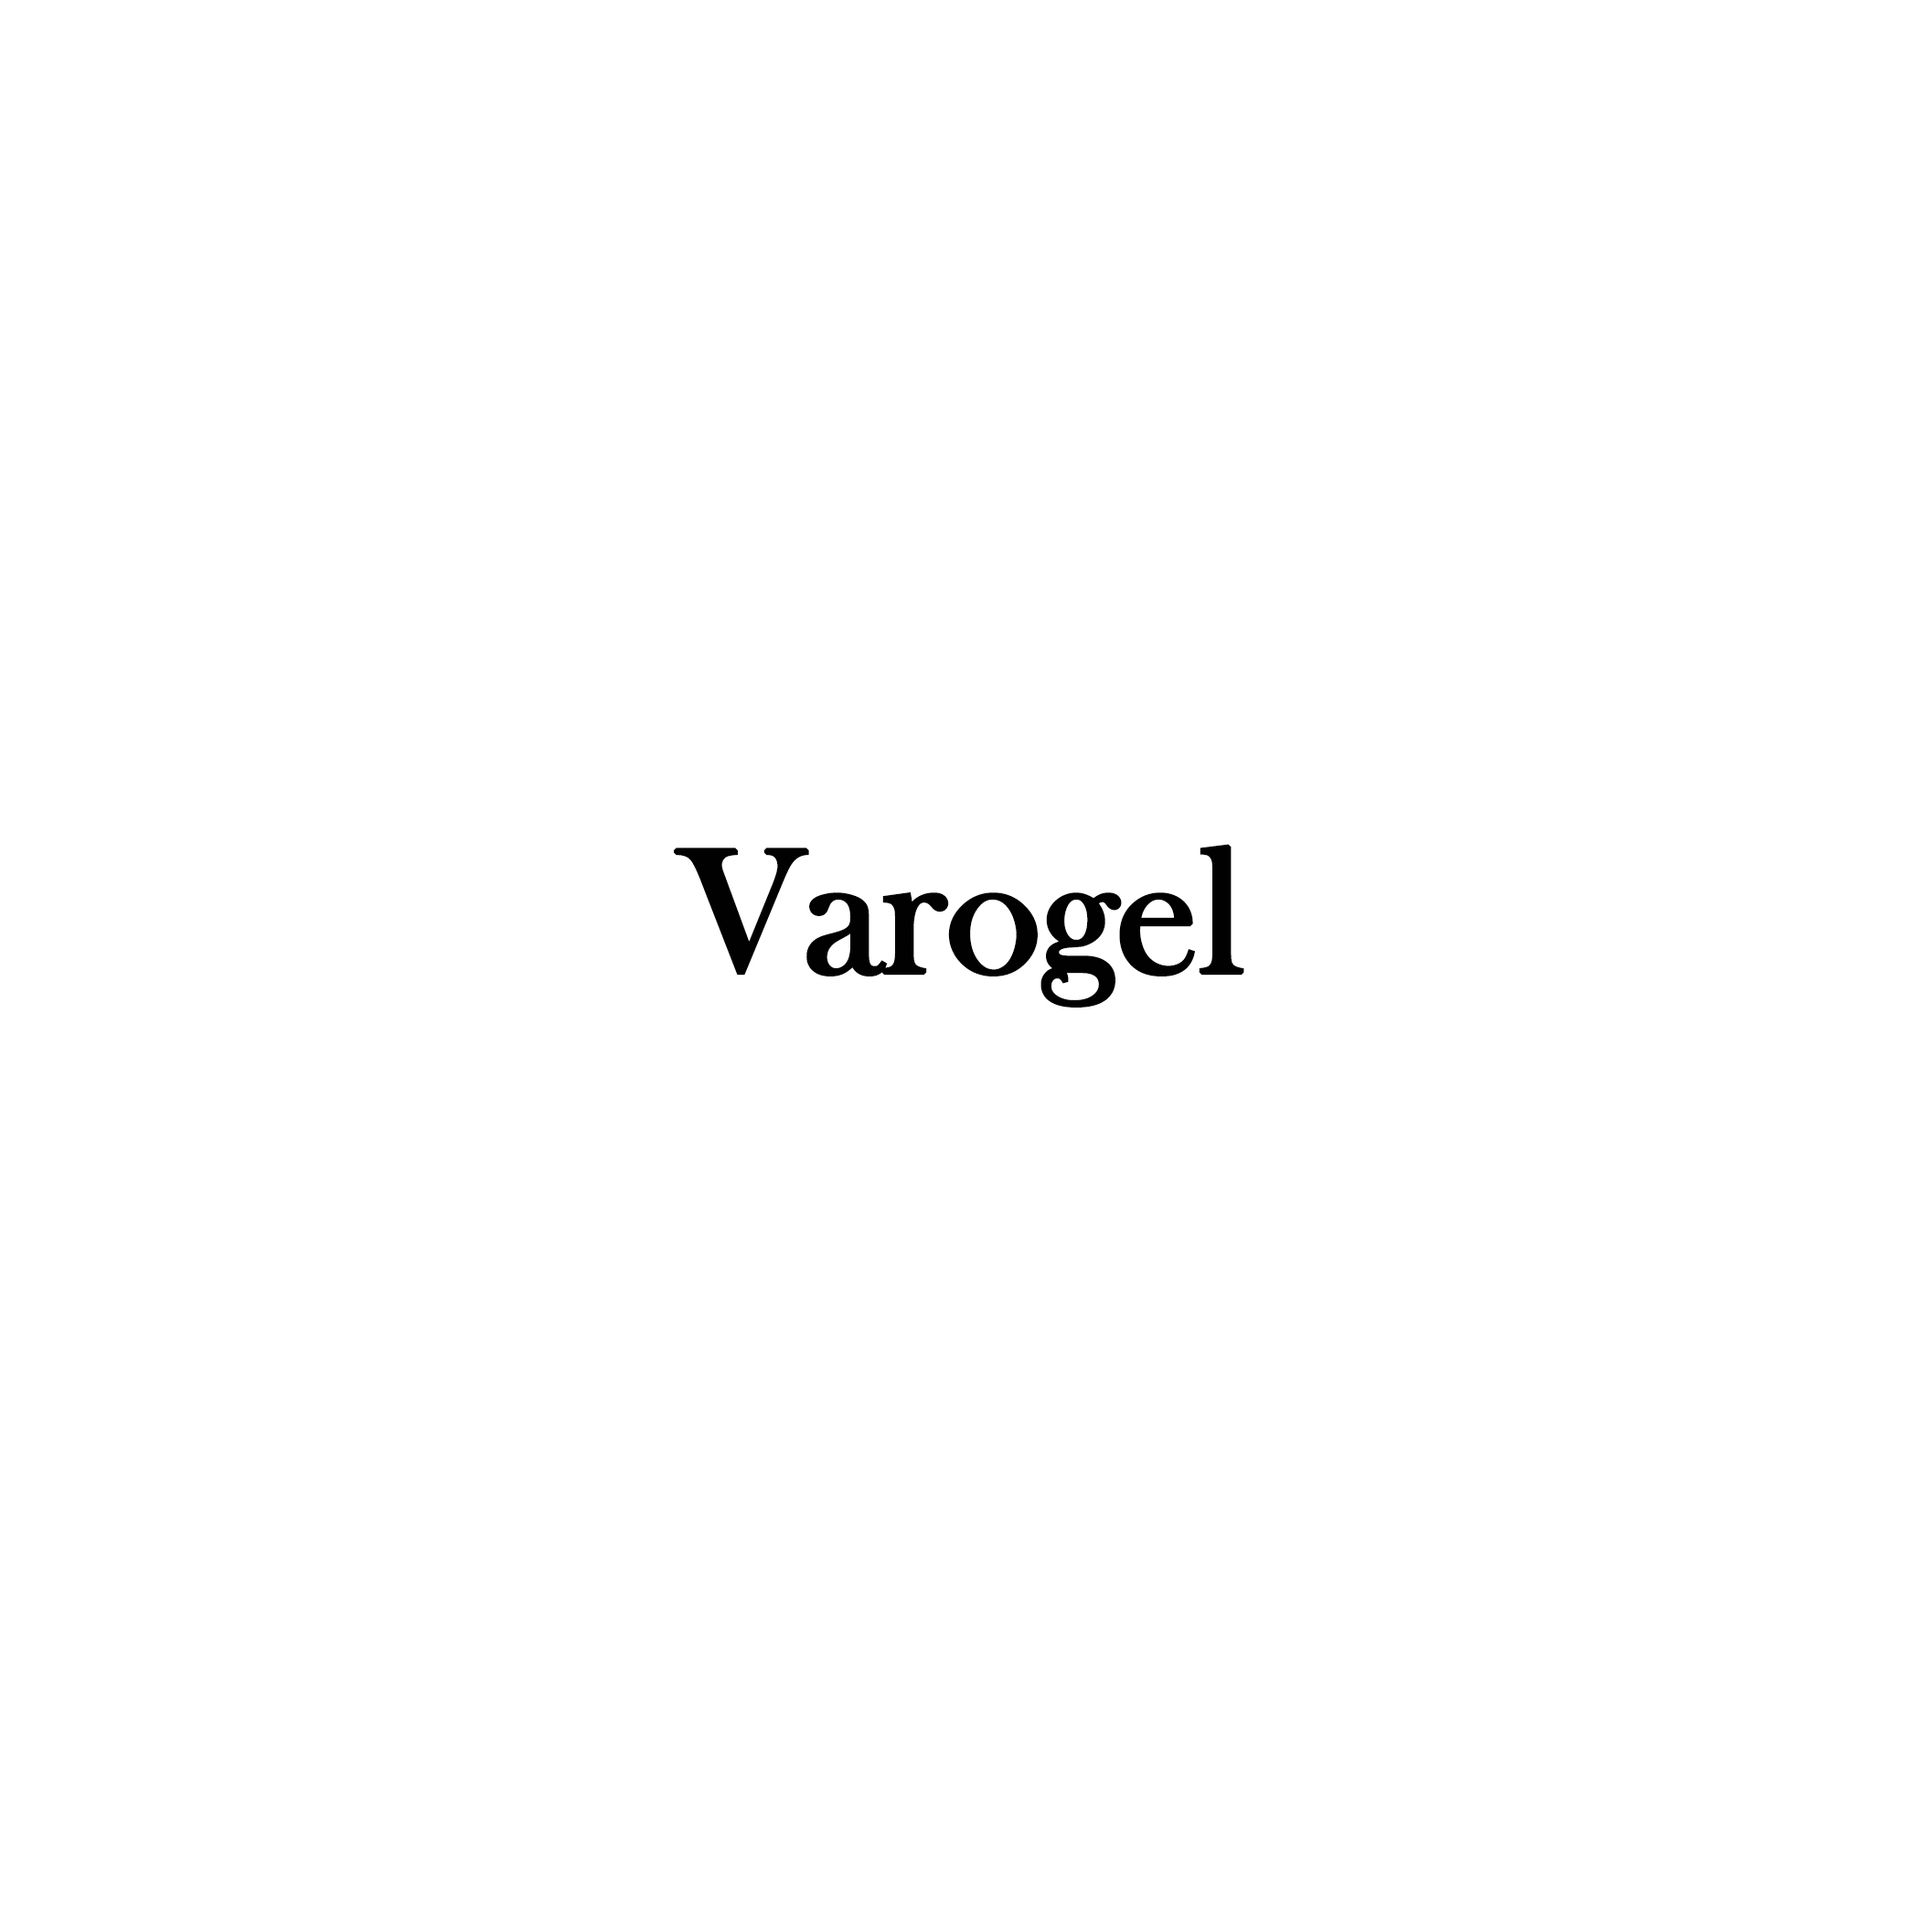 Product Brand: Varogel